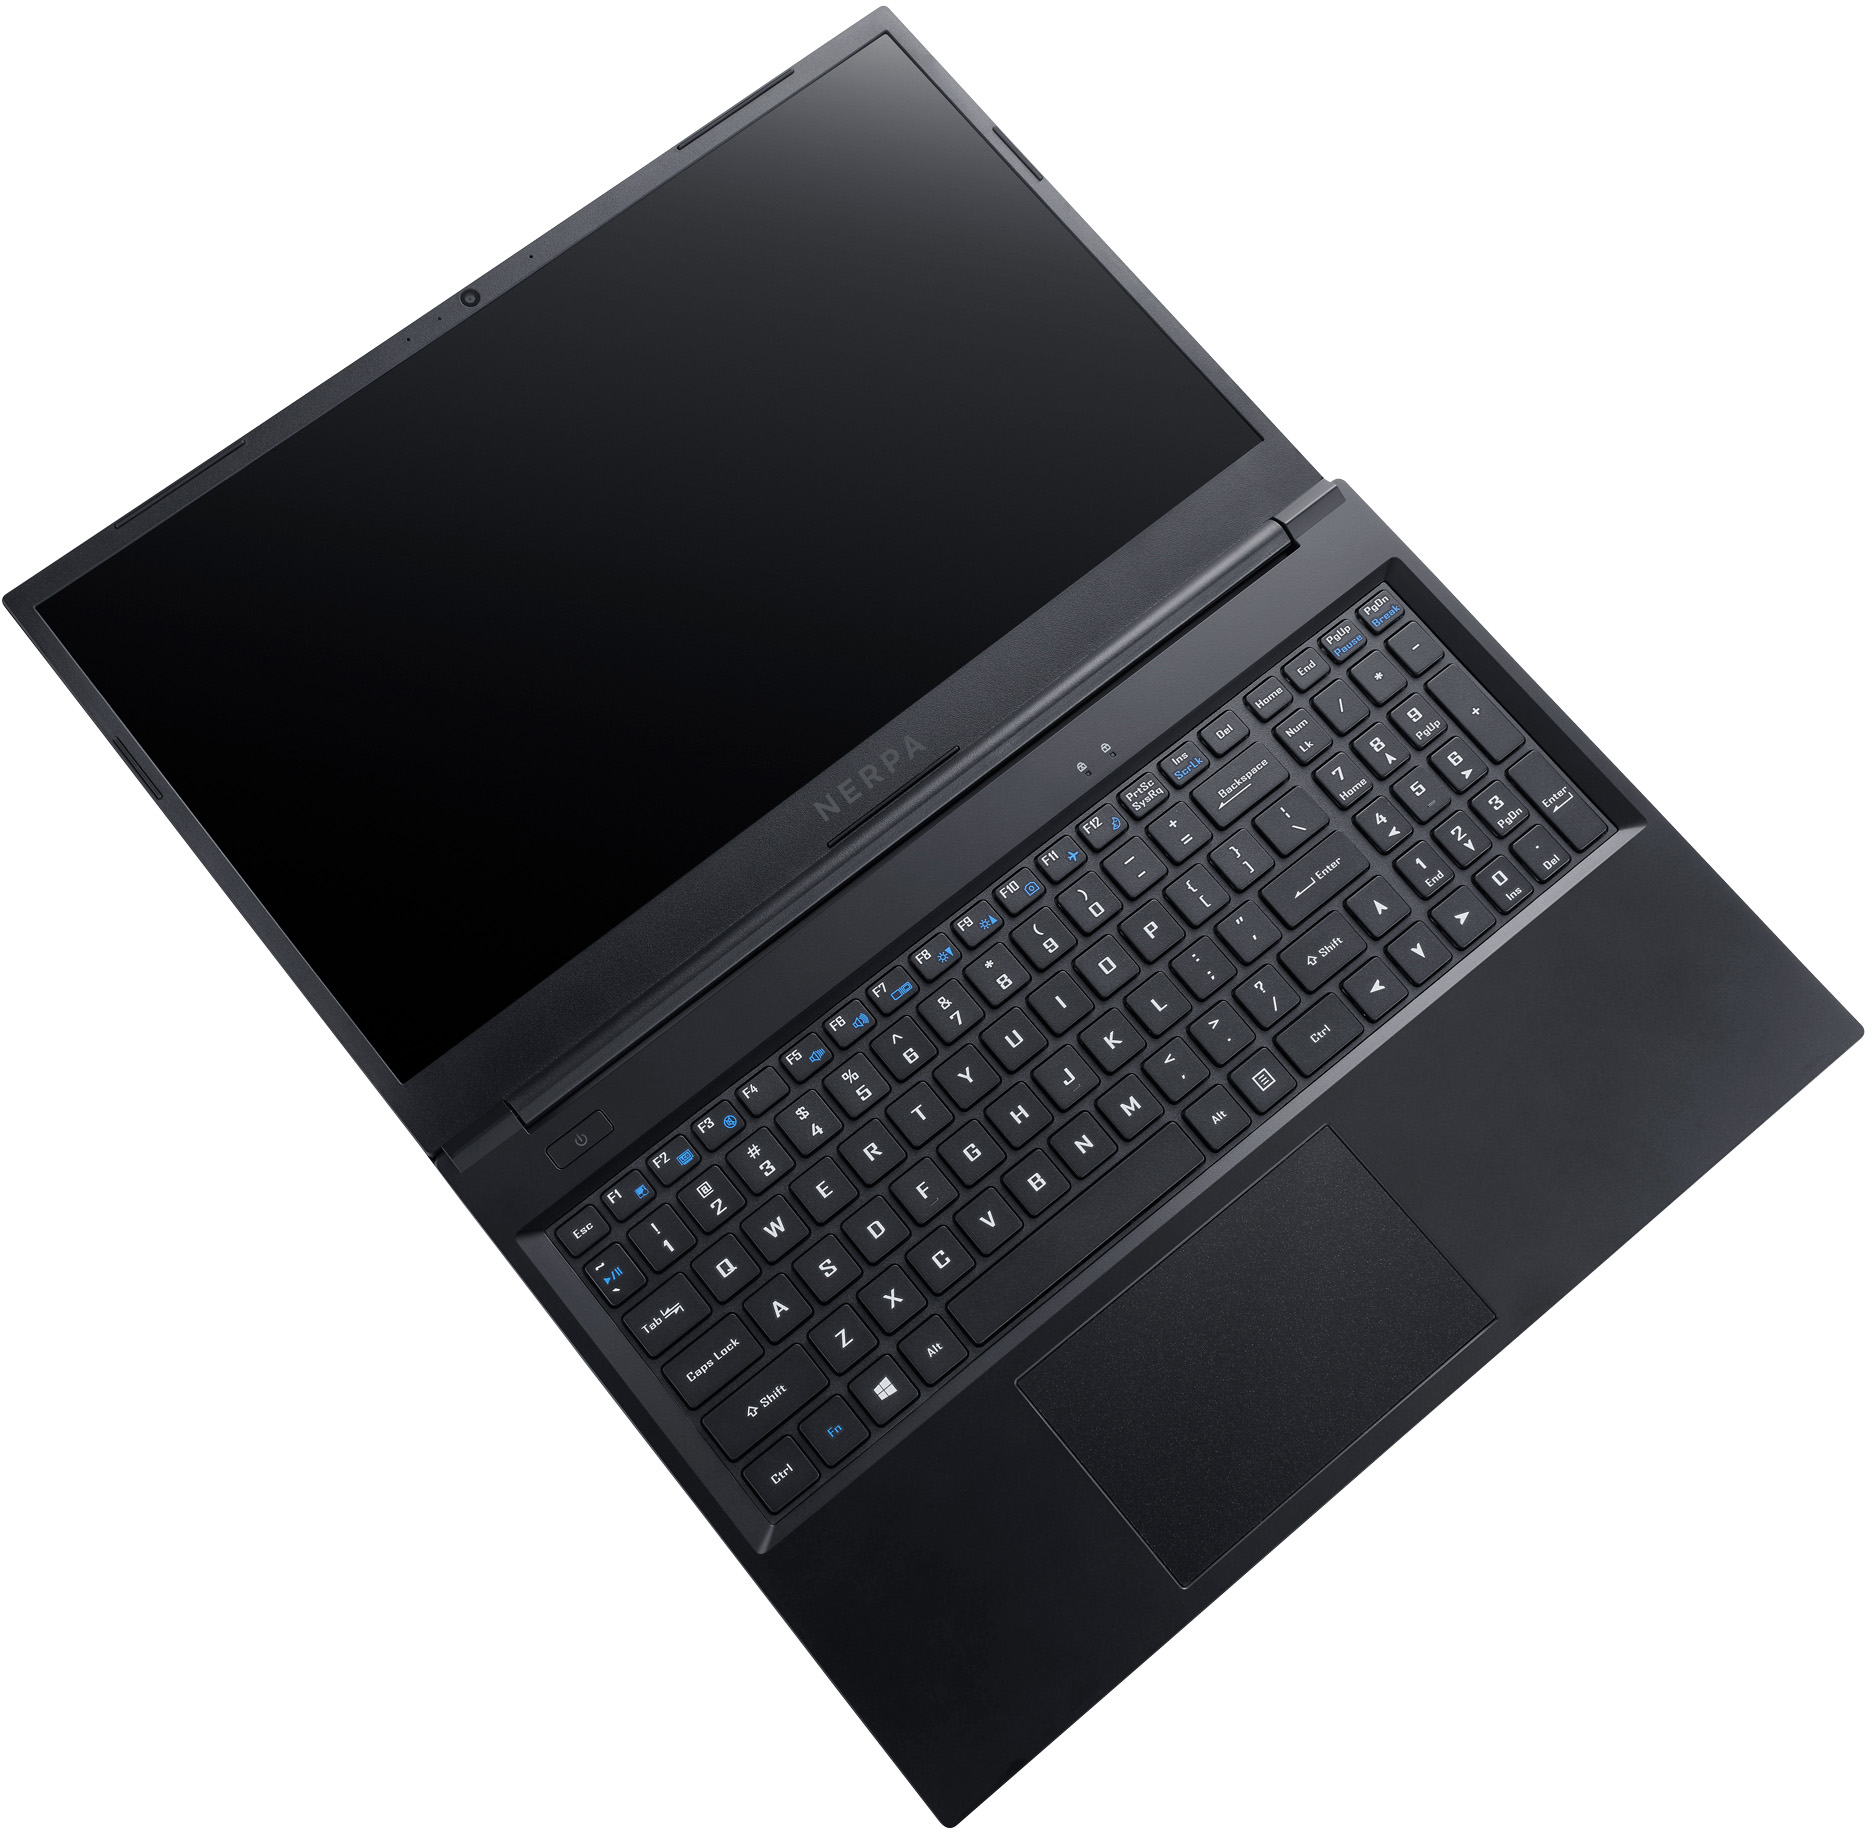 Ноутбук NERPA A552-15AA082500K, черный